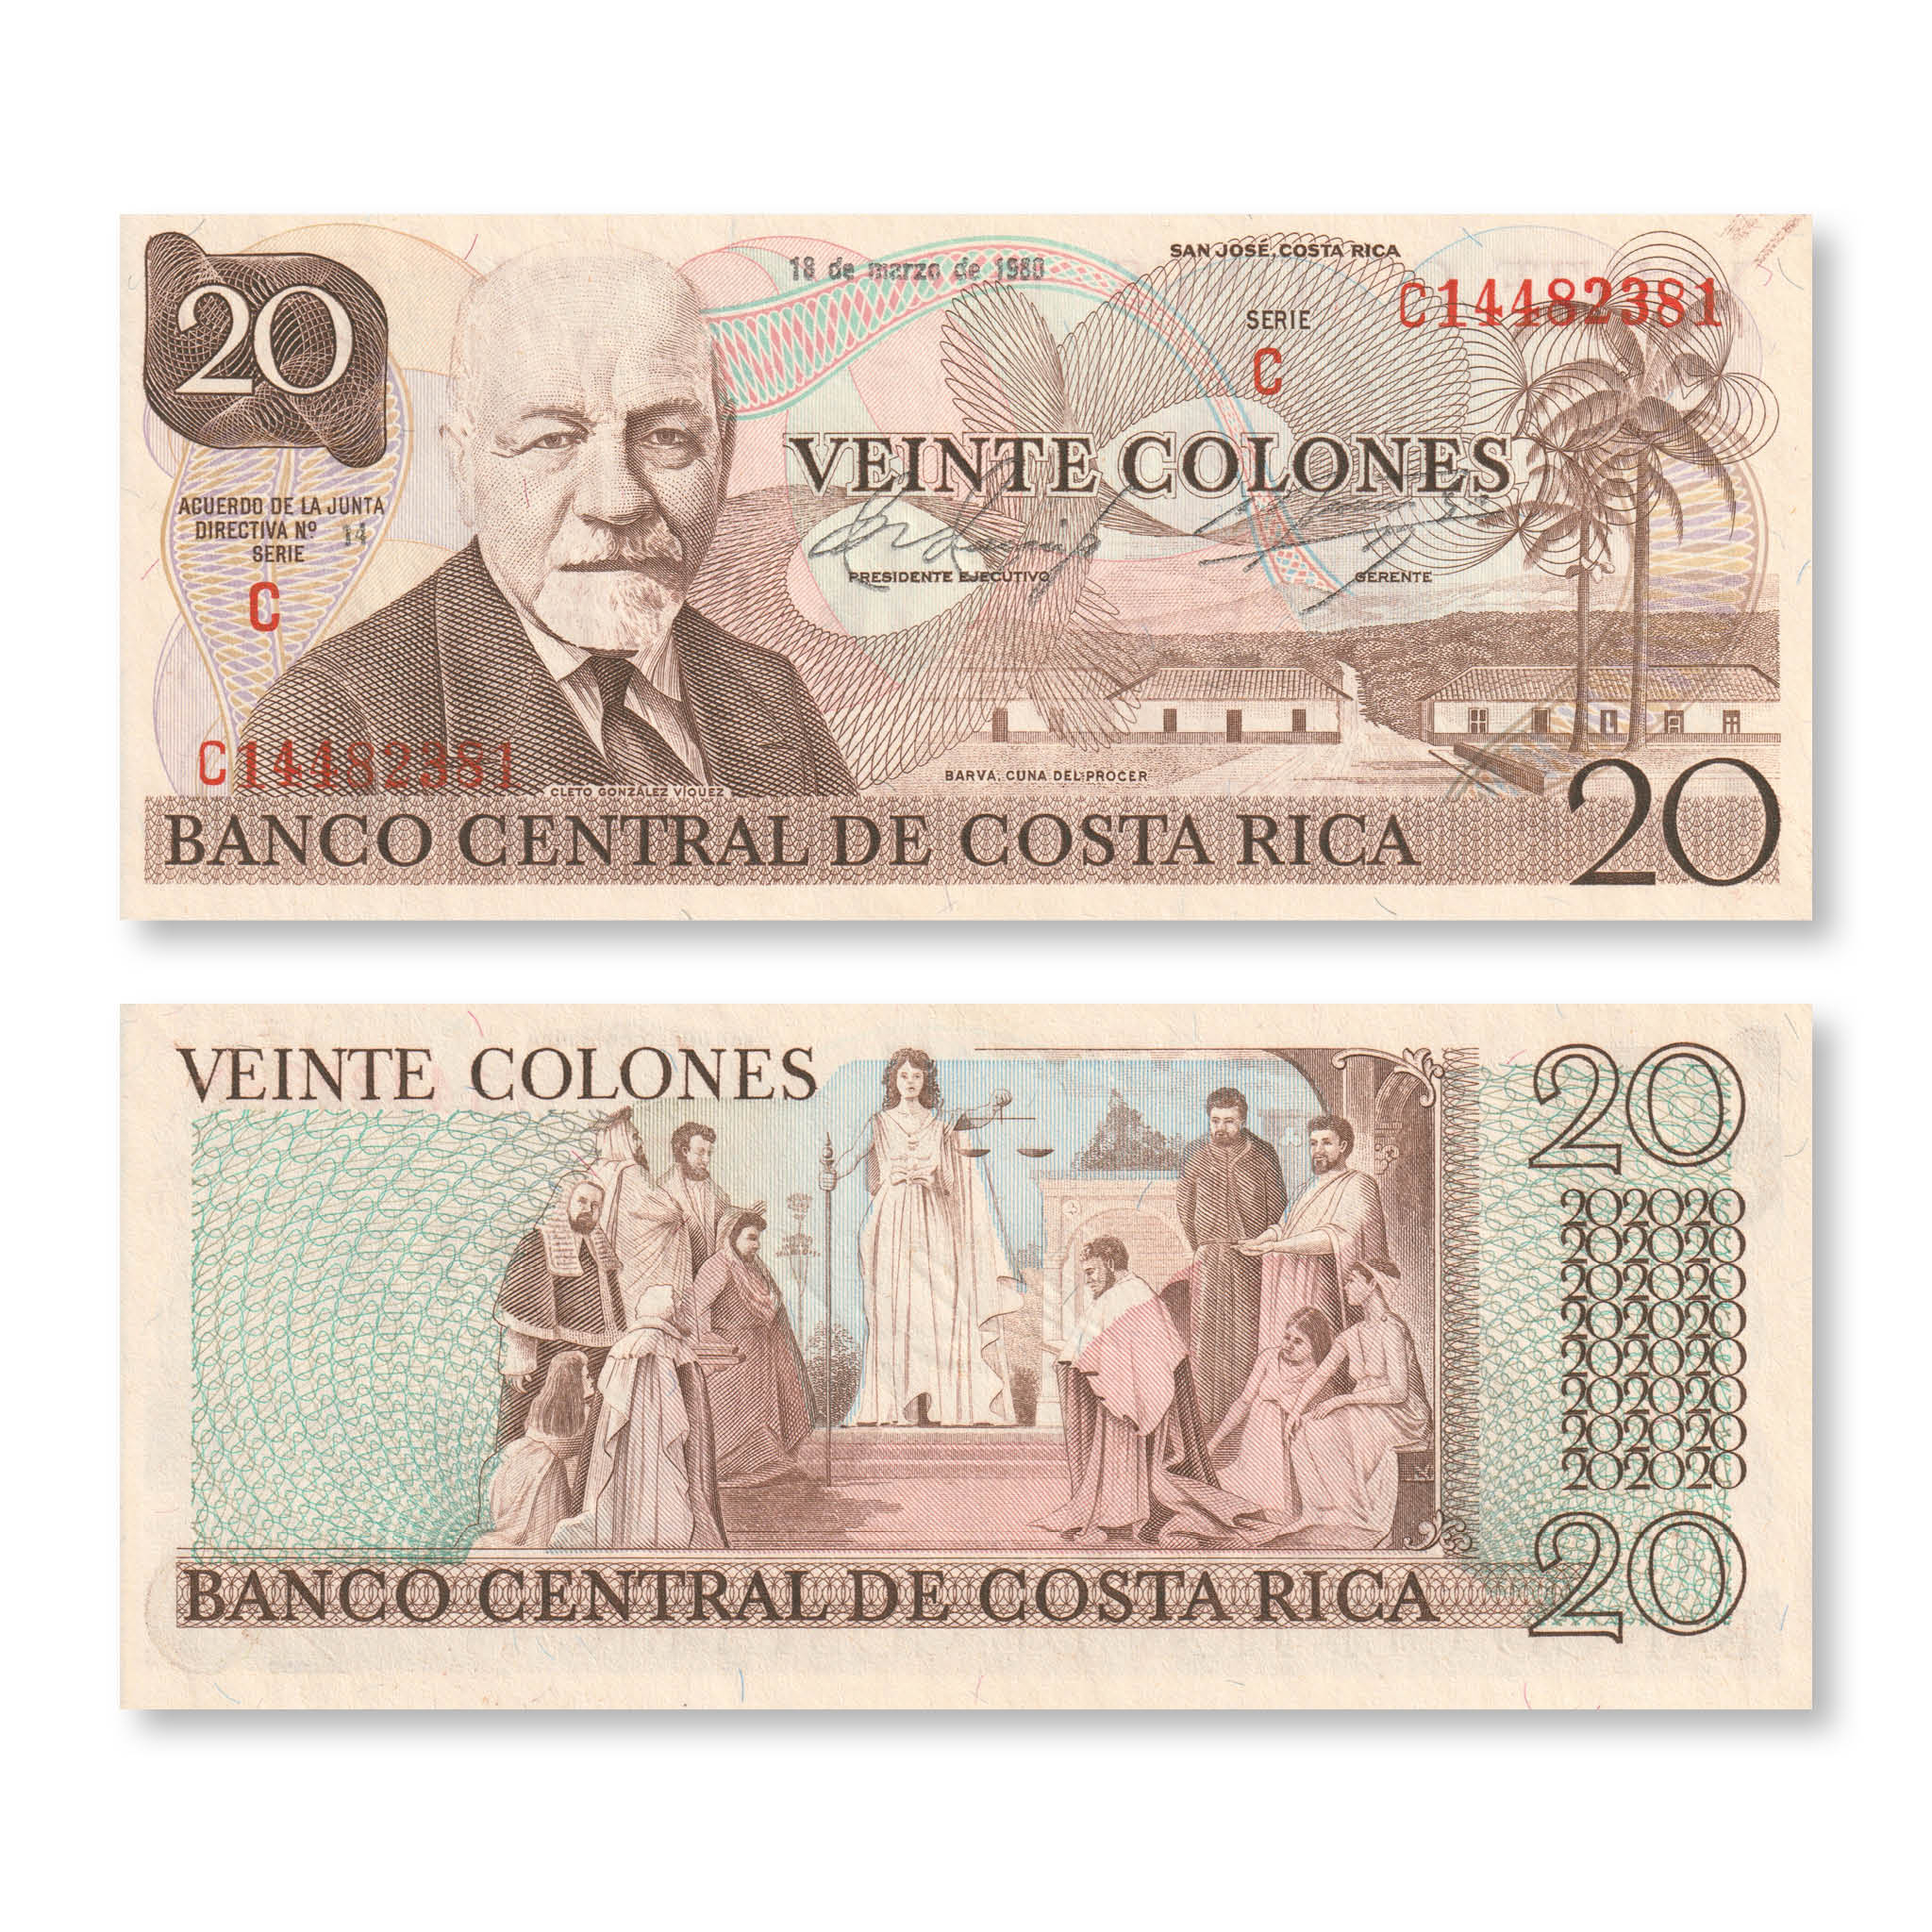 Costa Rica 20 Colones, 1972, B524a, P238a, UNC - Robert's World Money - World Banknotes